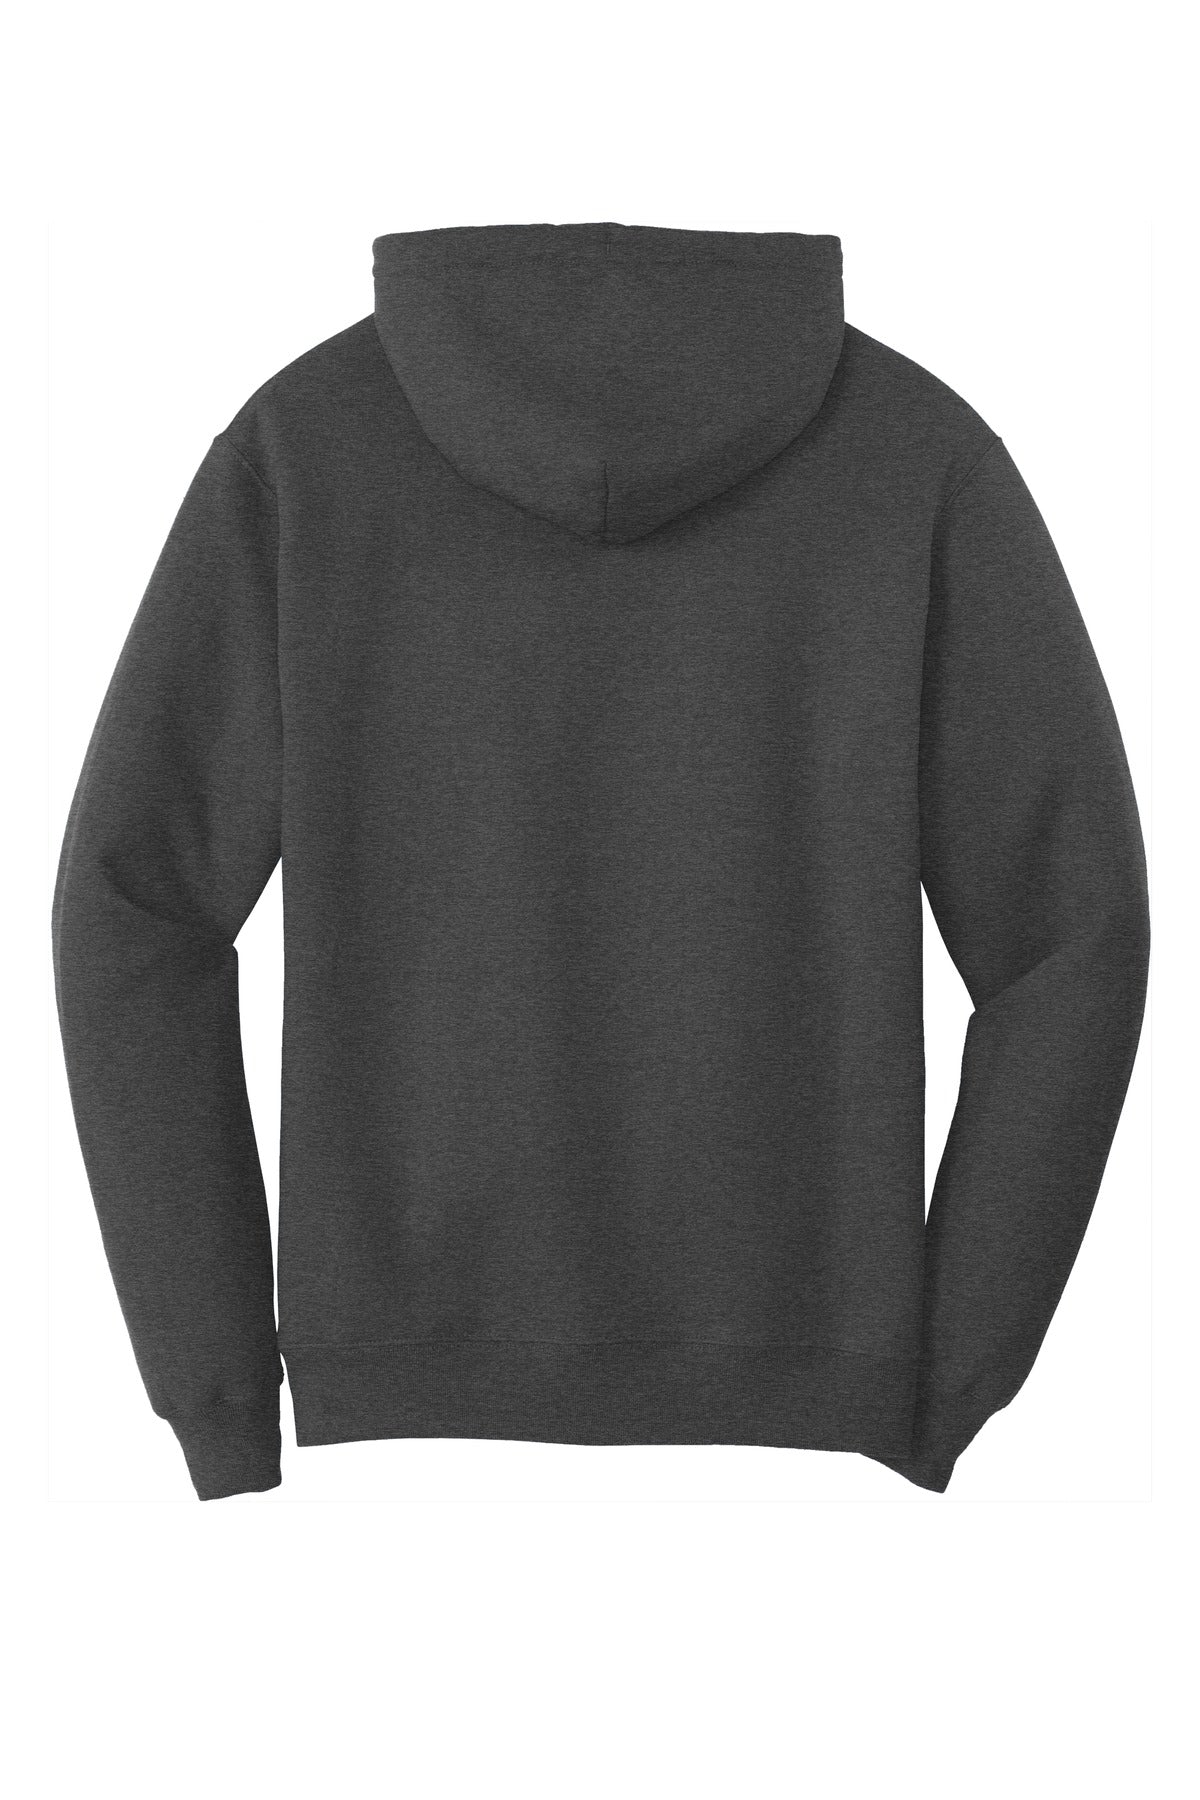 Port & Company  Tall Core Fleece Pullover Hooded Sweatshirt PC78HT